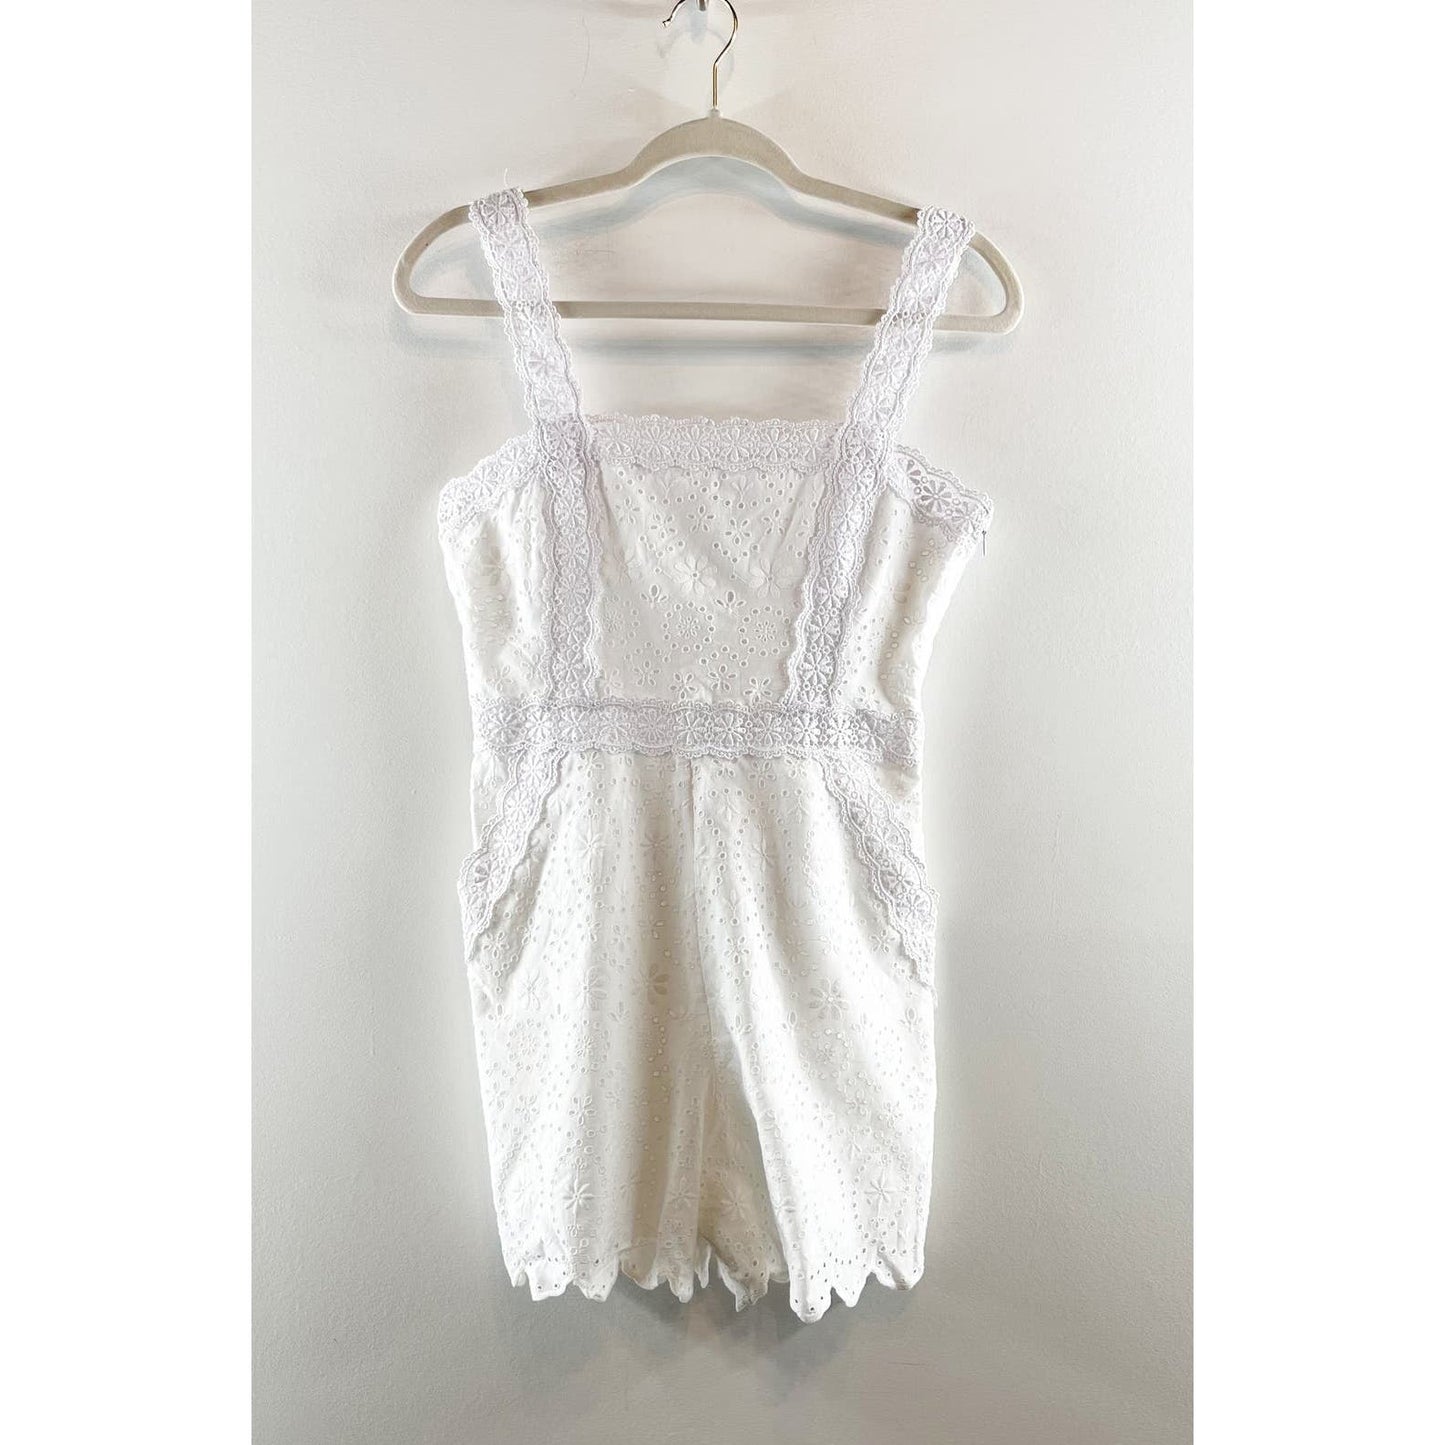 Charo Ruiz Ibiza Zuma Crocheted Lace Cotton Blend Jumpsuit Romper White Small